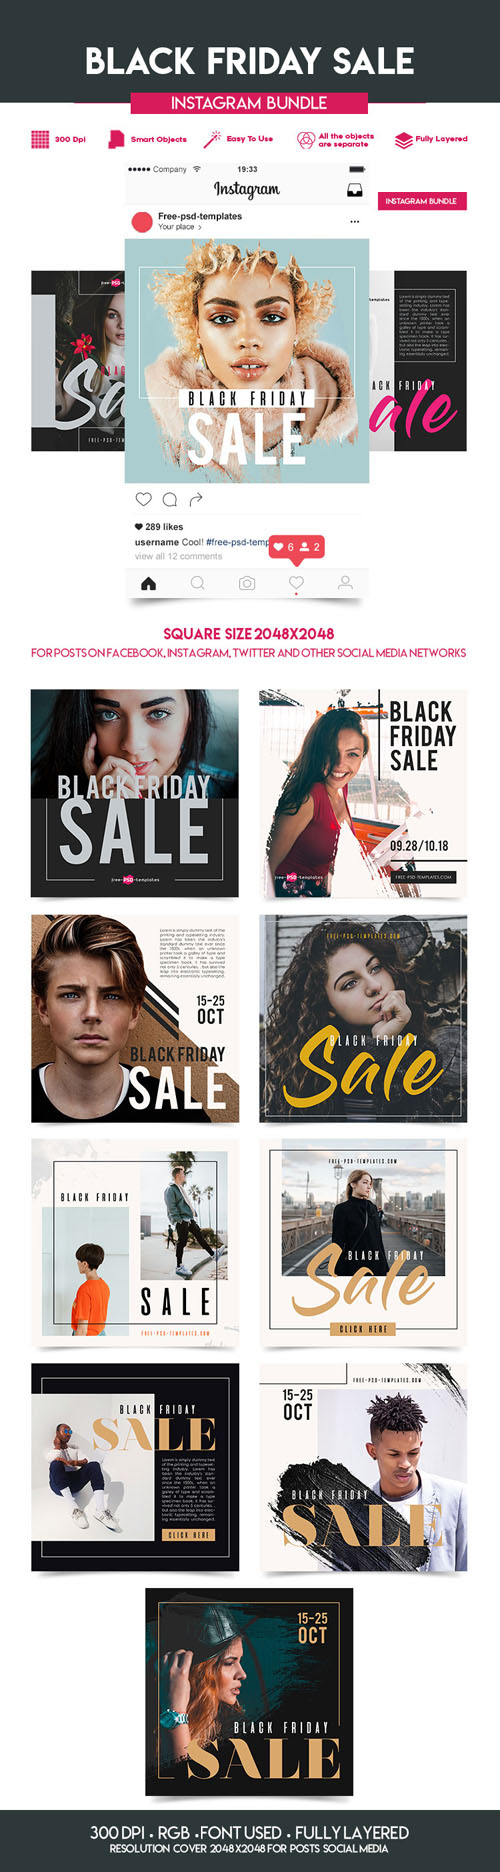 12 Black Friday Sale Instagram Banners Bundle